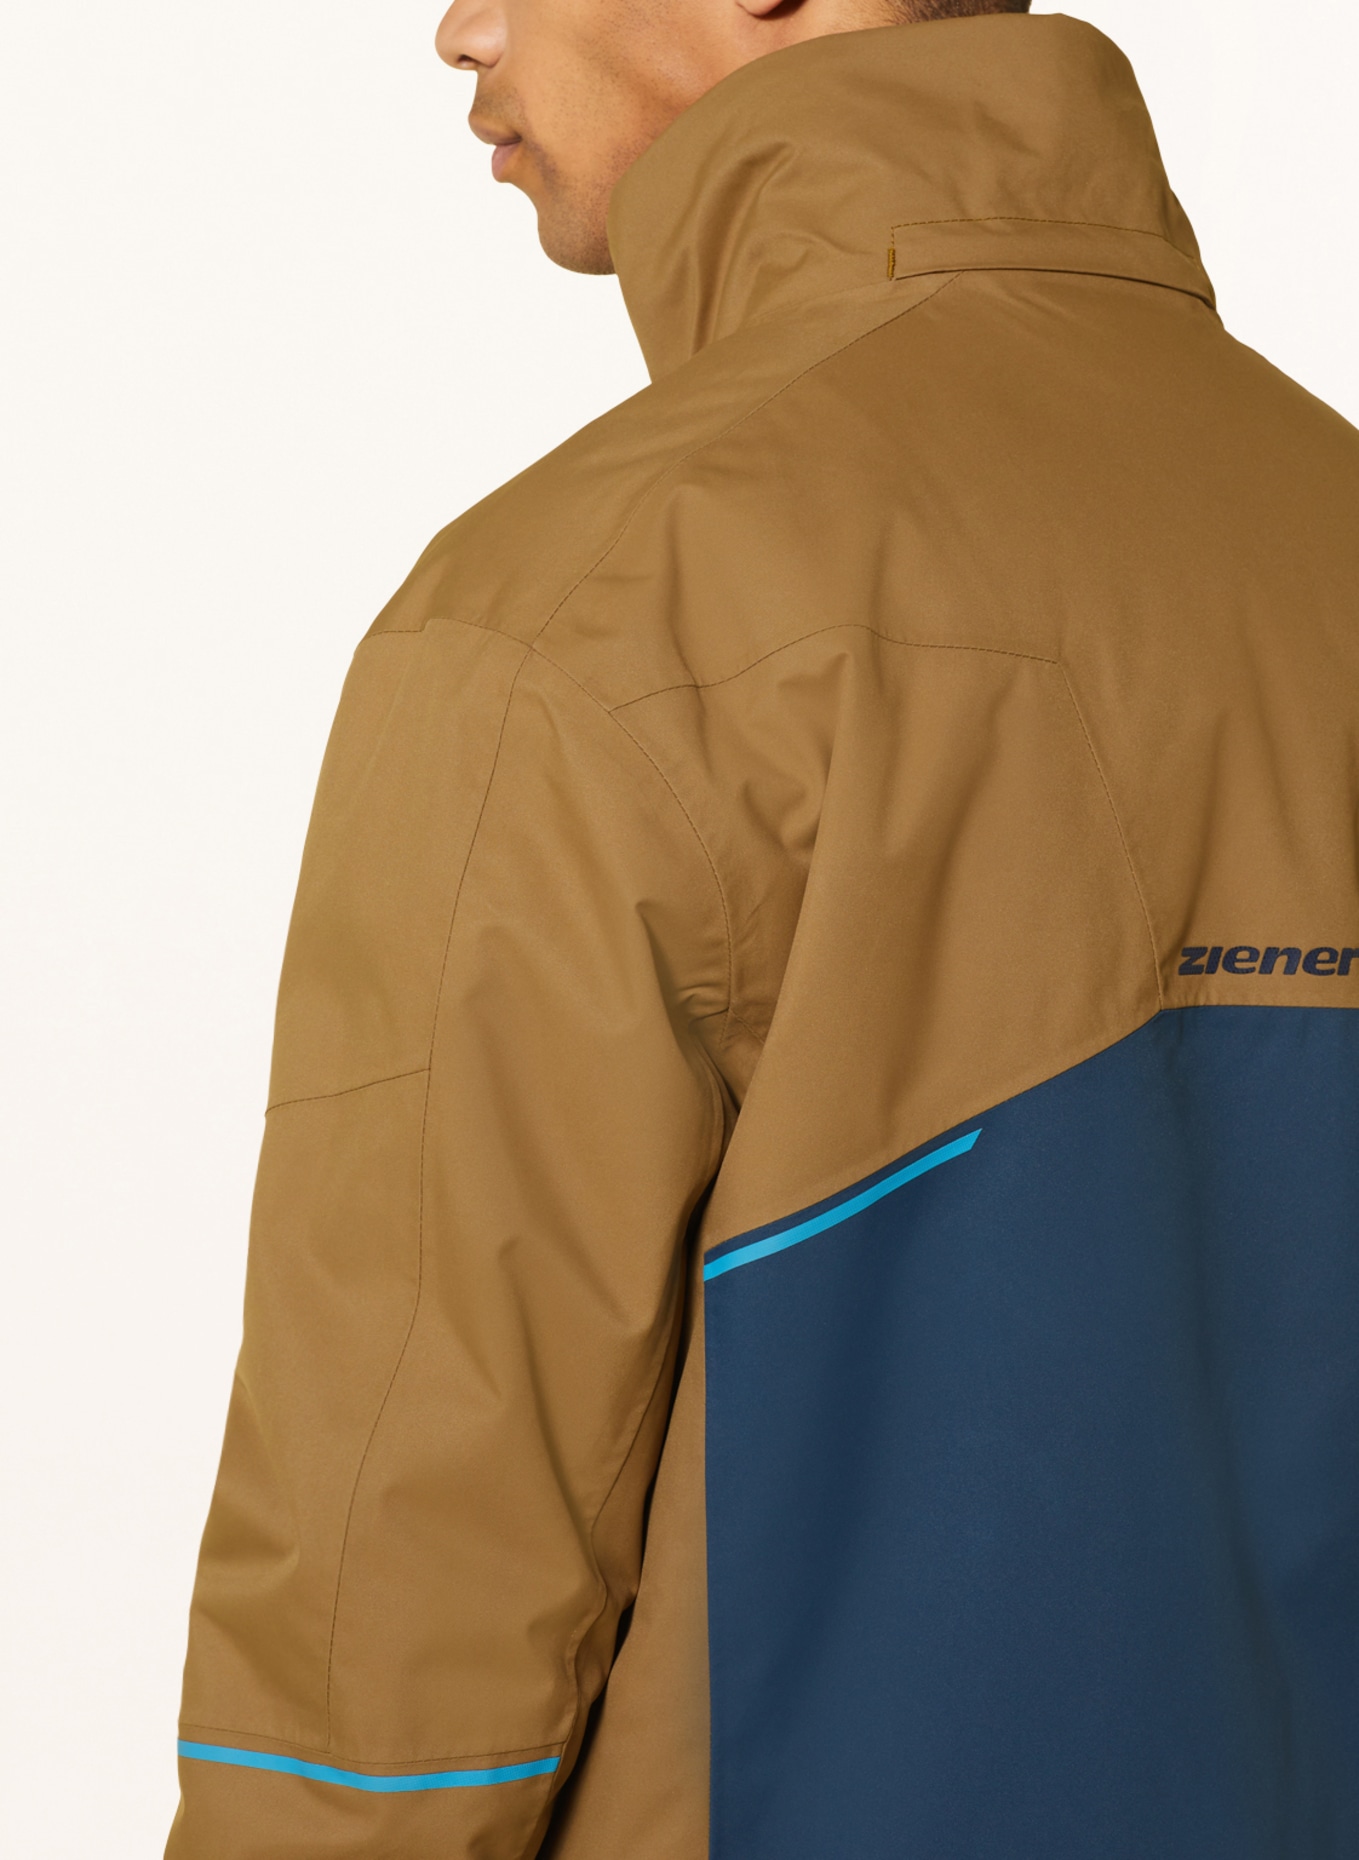 dark brown/ Ski ziener blue in TOACA jacket